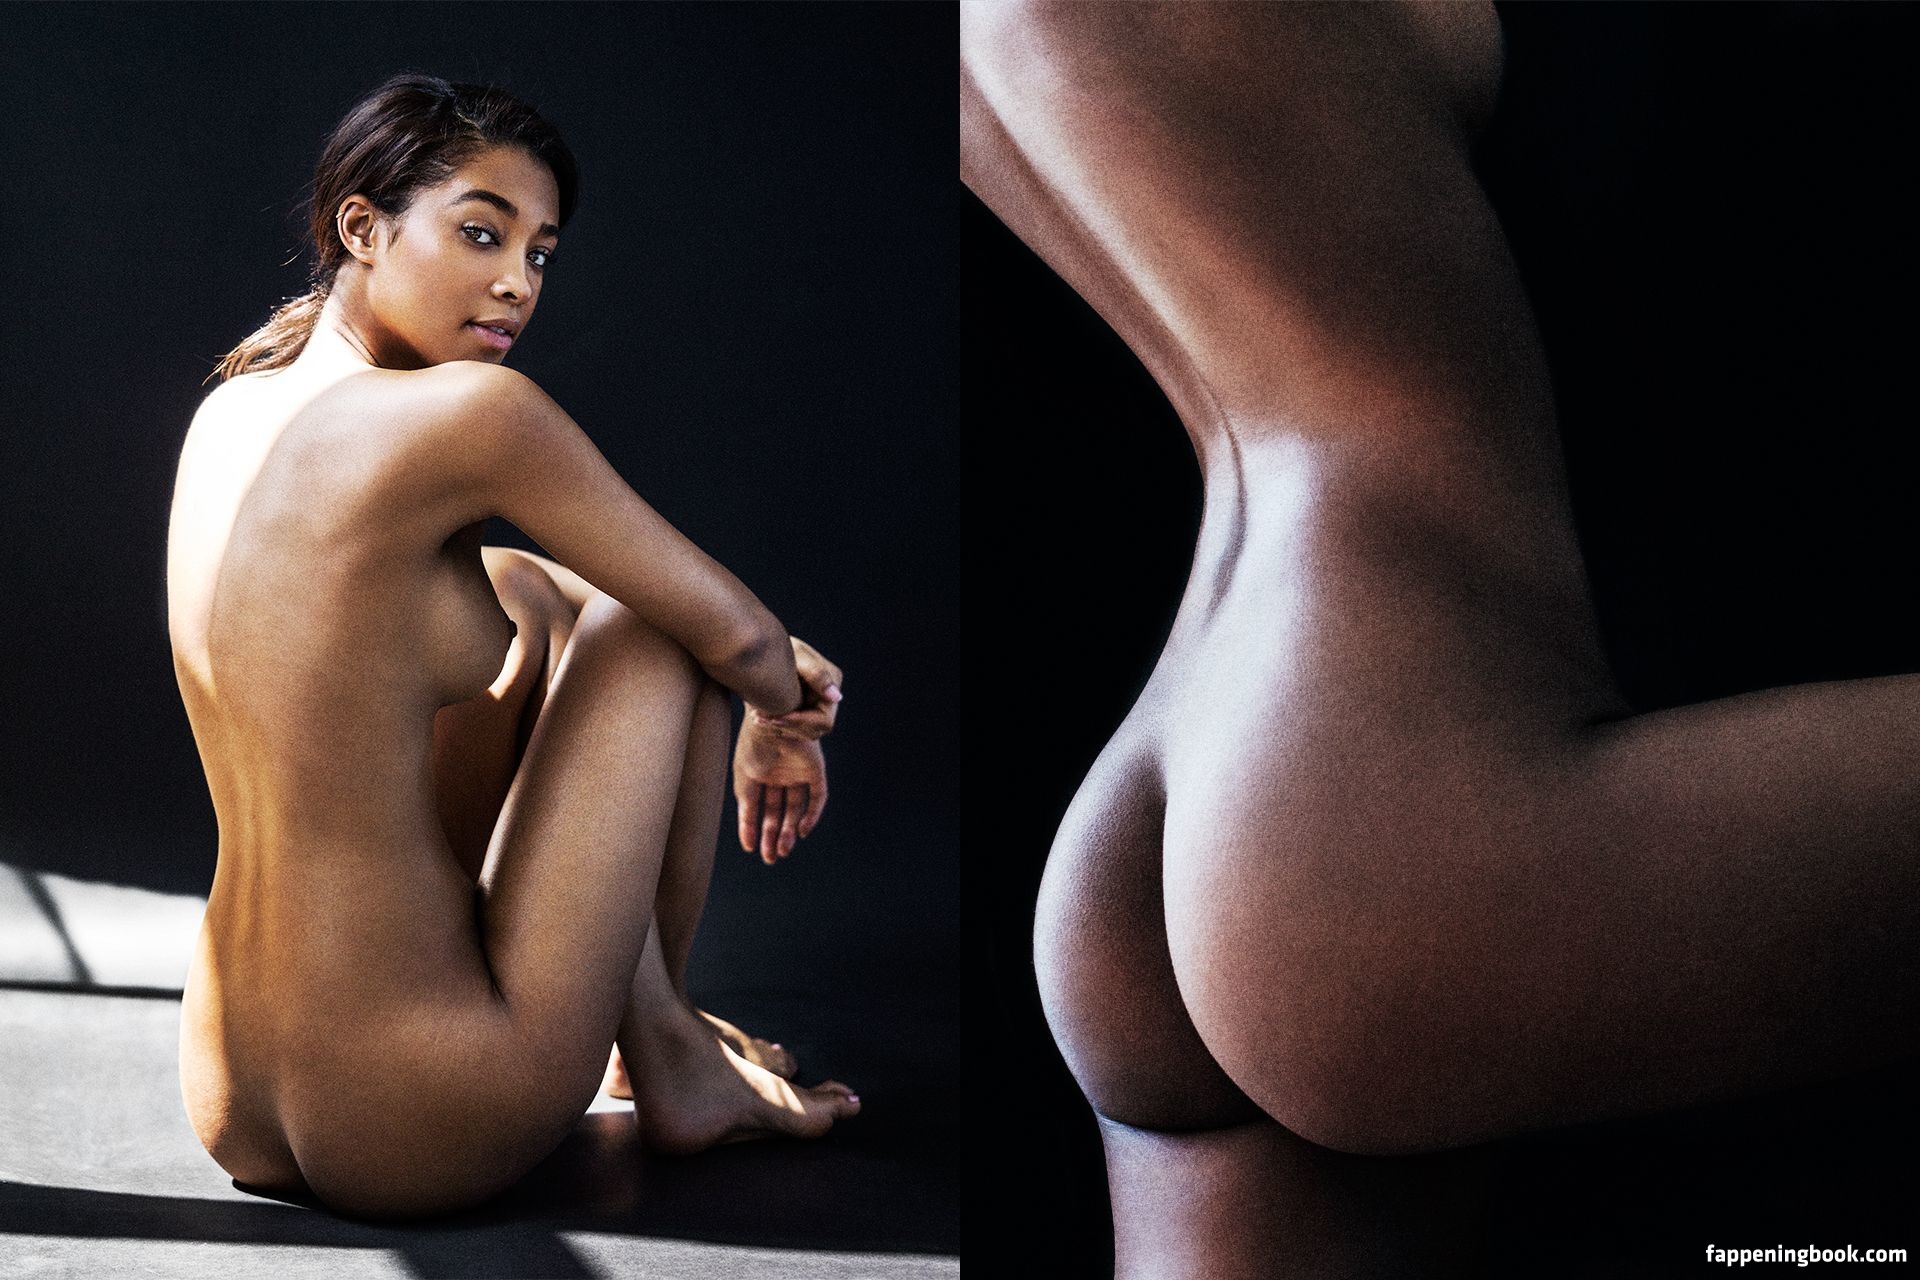 Dr jennifer ashton nude - 🧡 Things I Like - 10 photos.